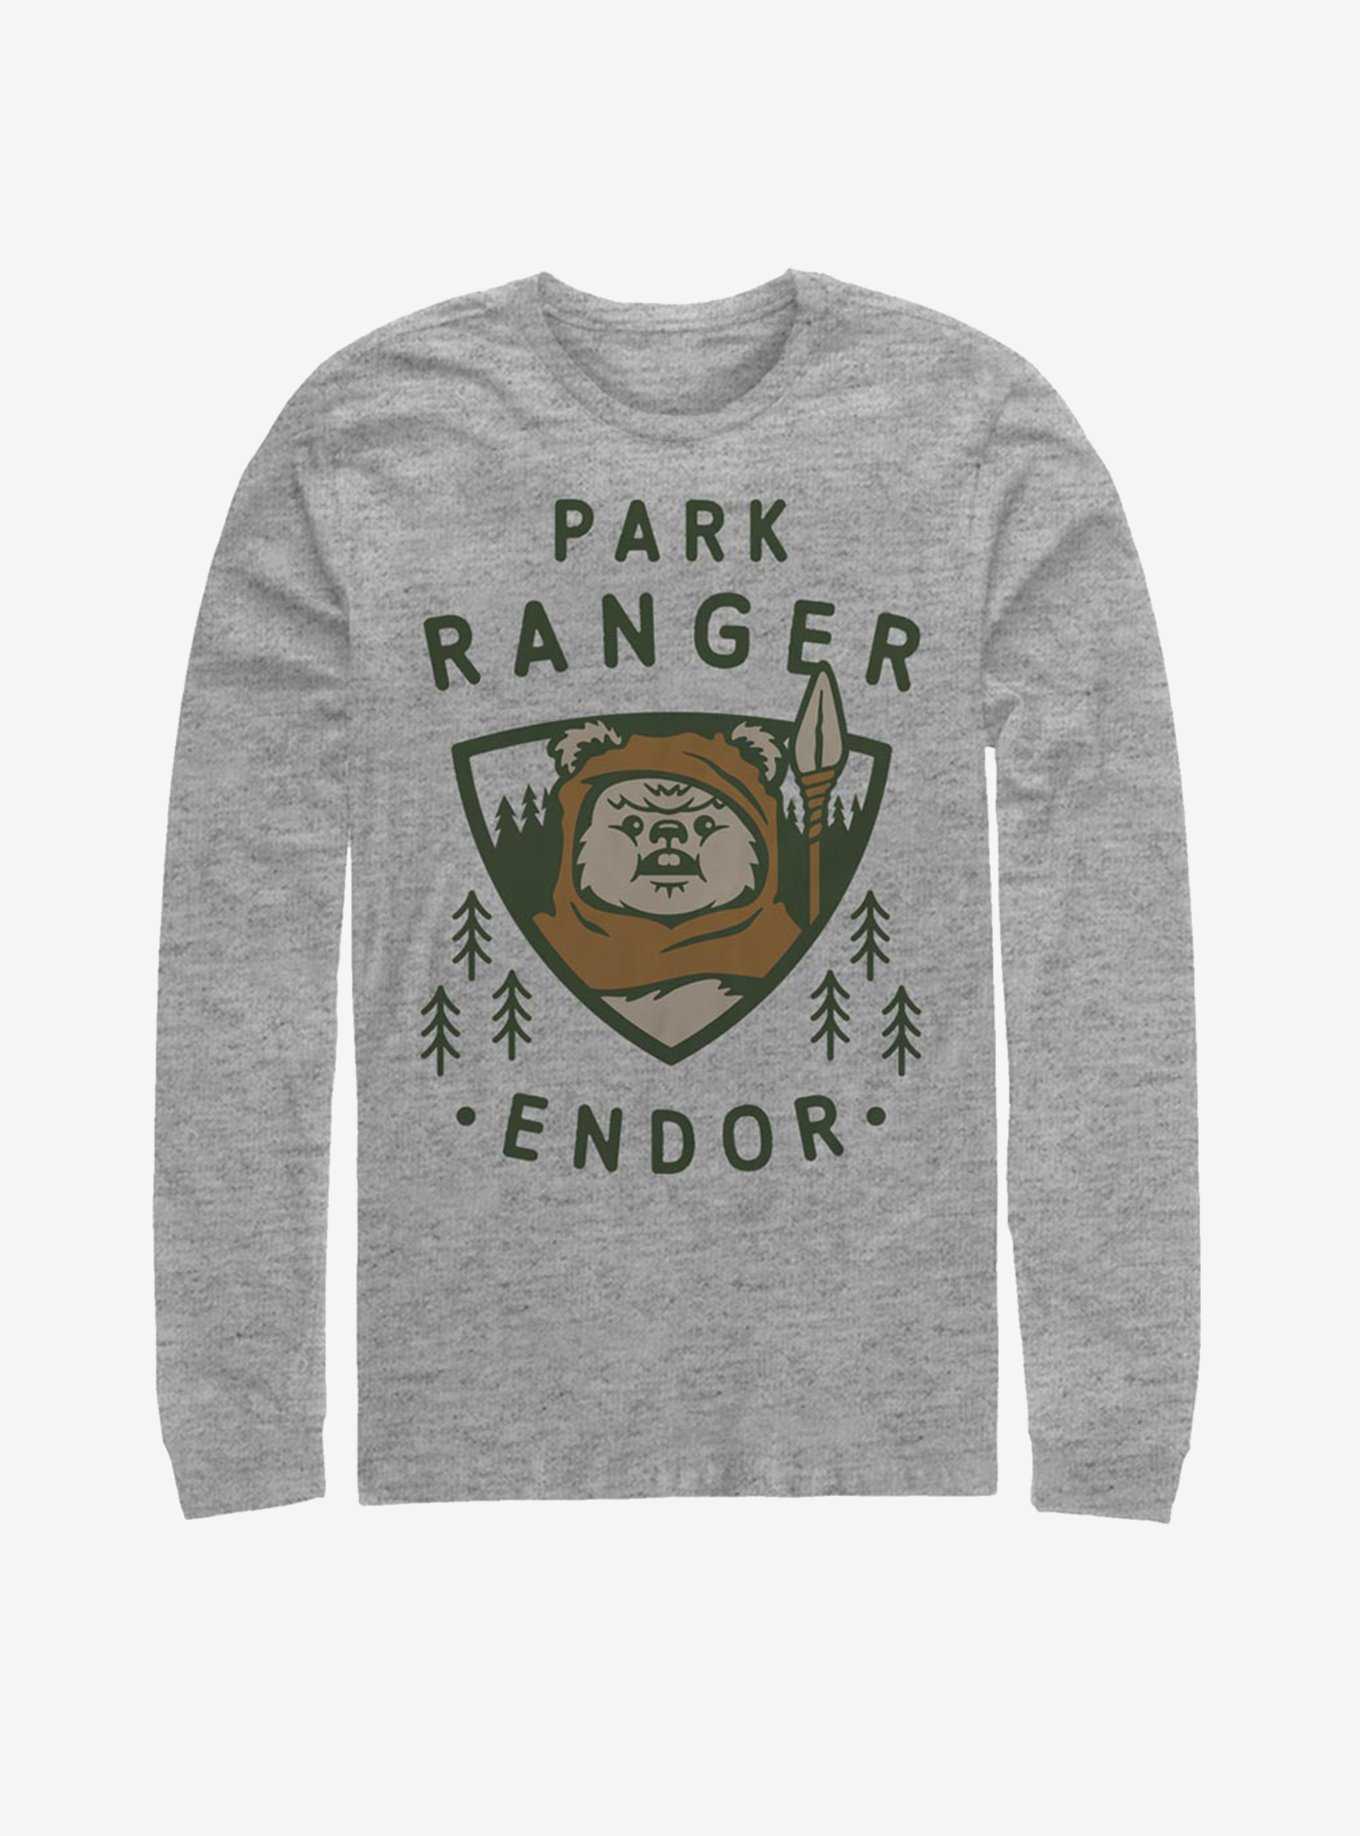 Star Wars Park Ranger Endor Long-Sleeve T-Shirt, , hi-res